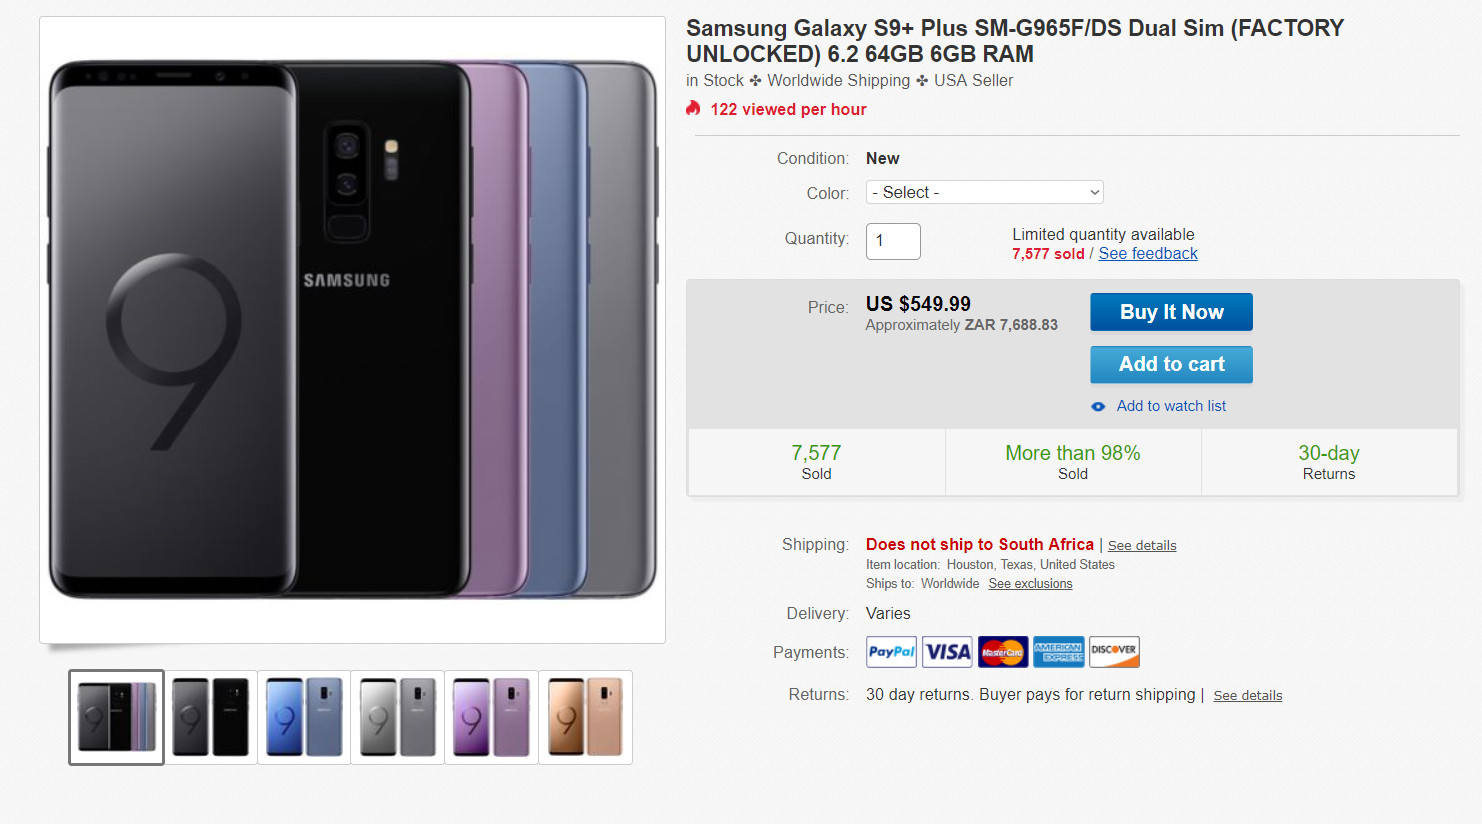 The Samsung Galaxy S9 Plus eBay listing.